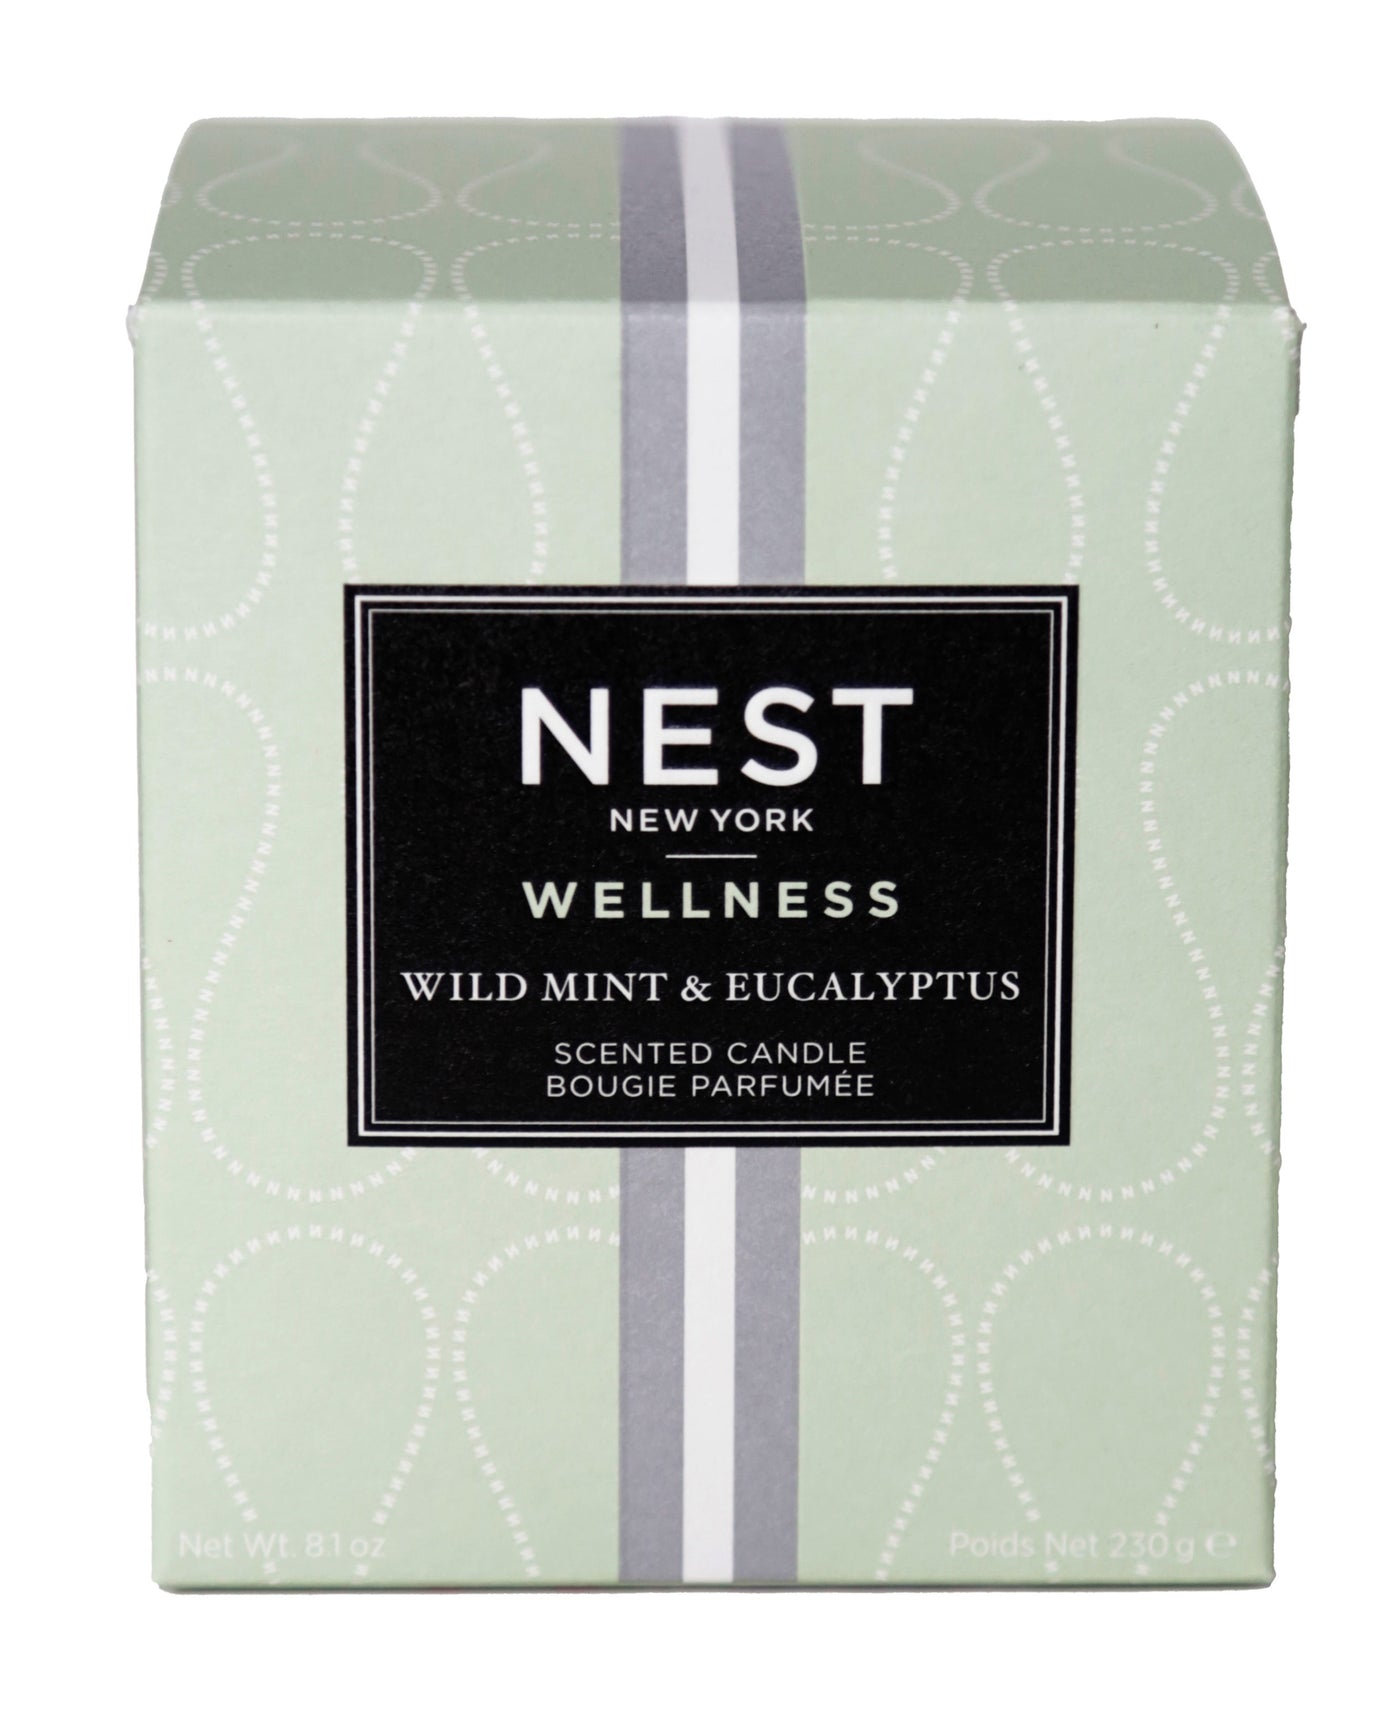 Nest Wellness Wild Mint & Eucalyptus Candle